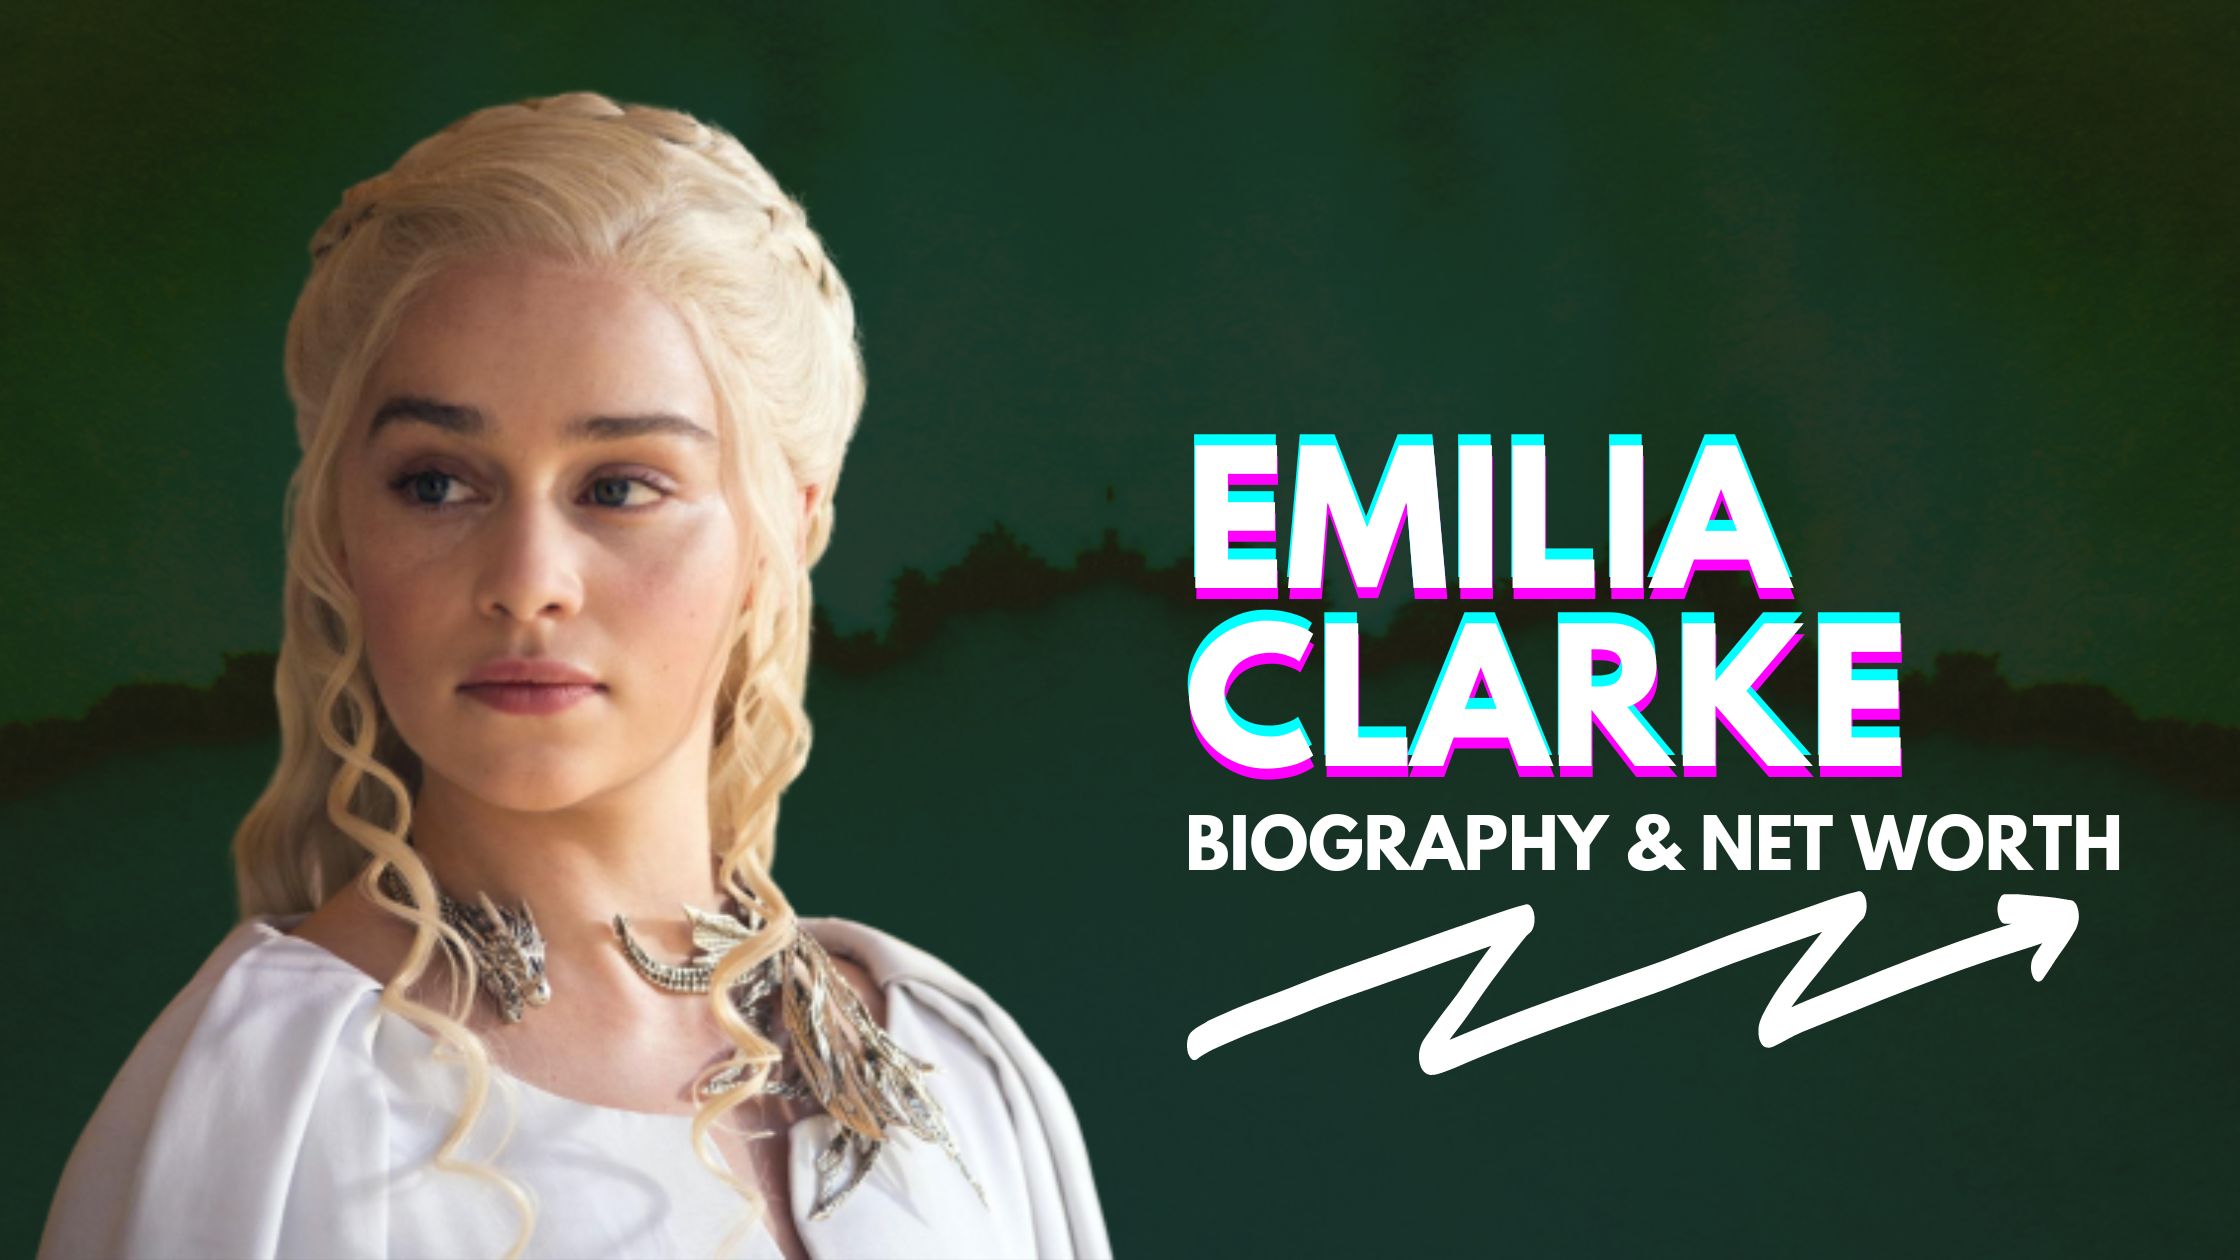 Emilia Clarke Net Worth and Biography